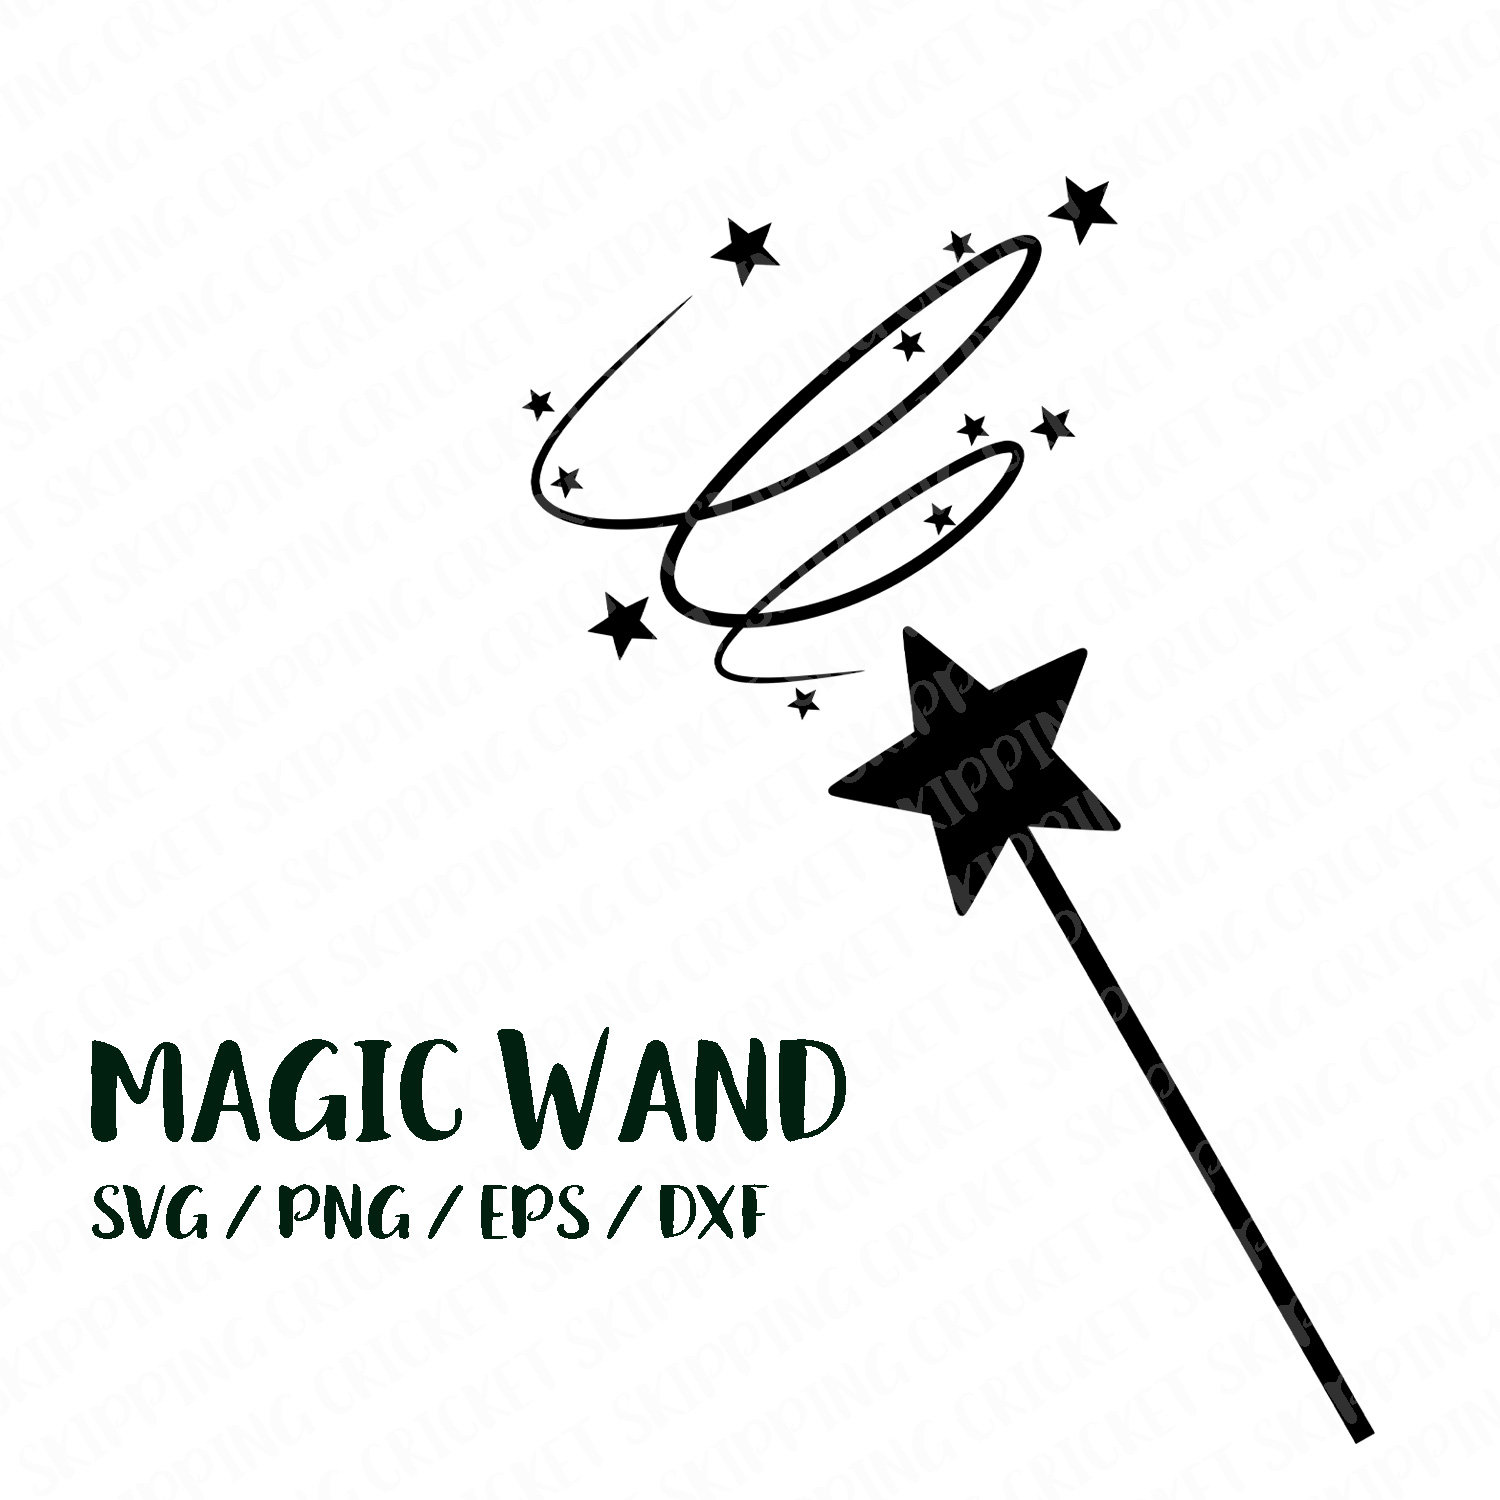 magician wand clipart